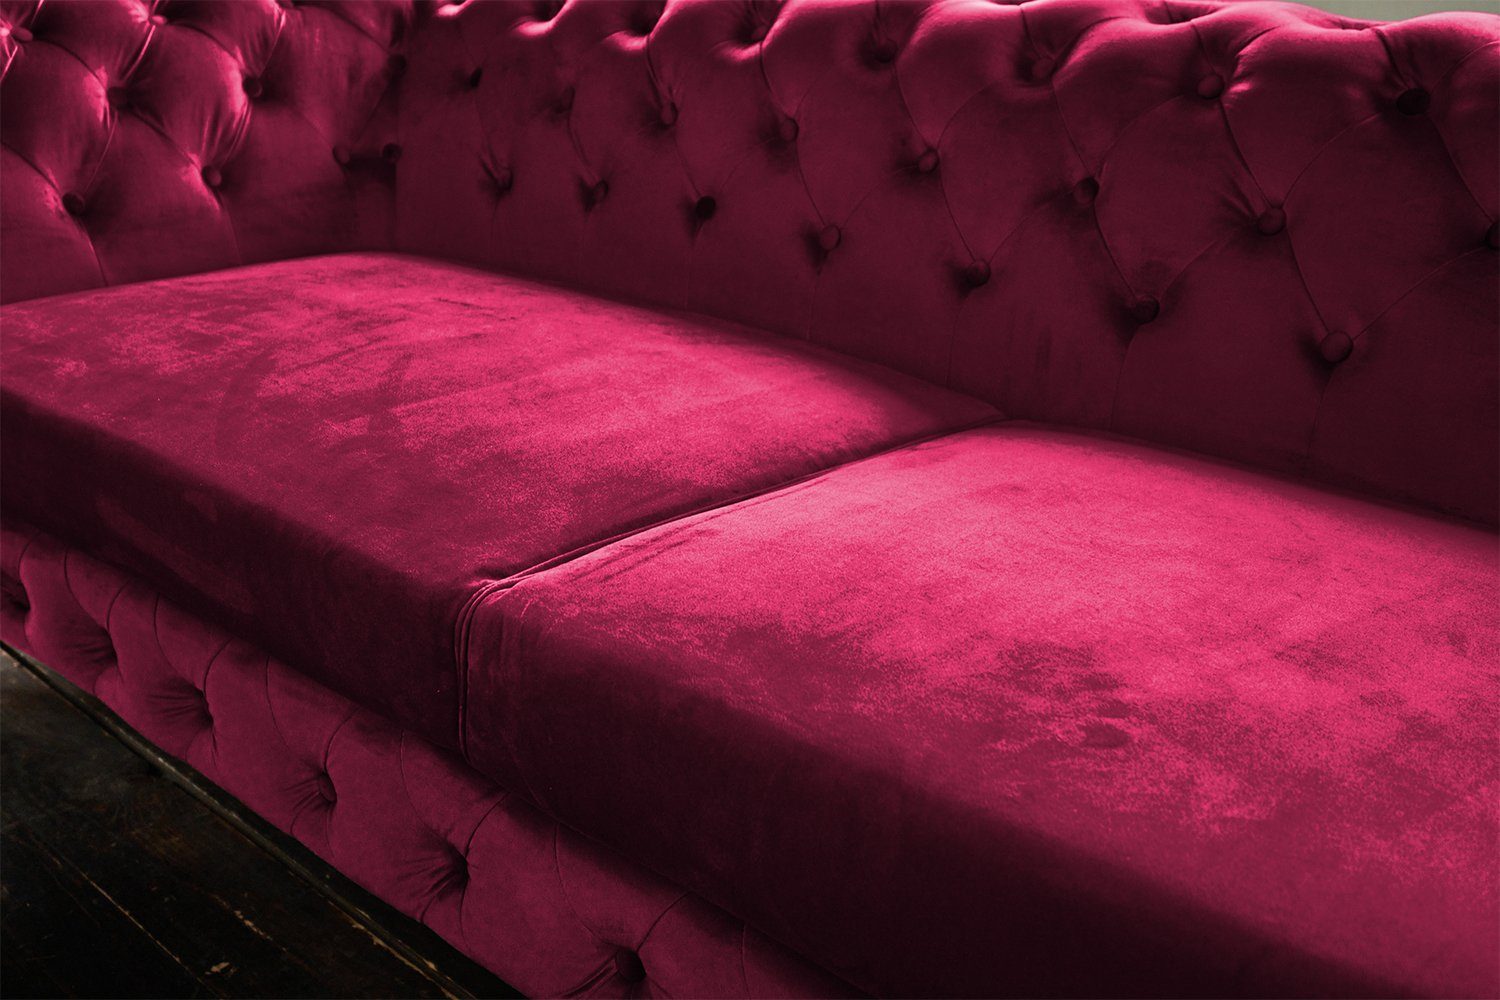 Sofa versch. 3-Sitzer KAWOLA Velvet Farben Chesterfield NARLA, rot